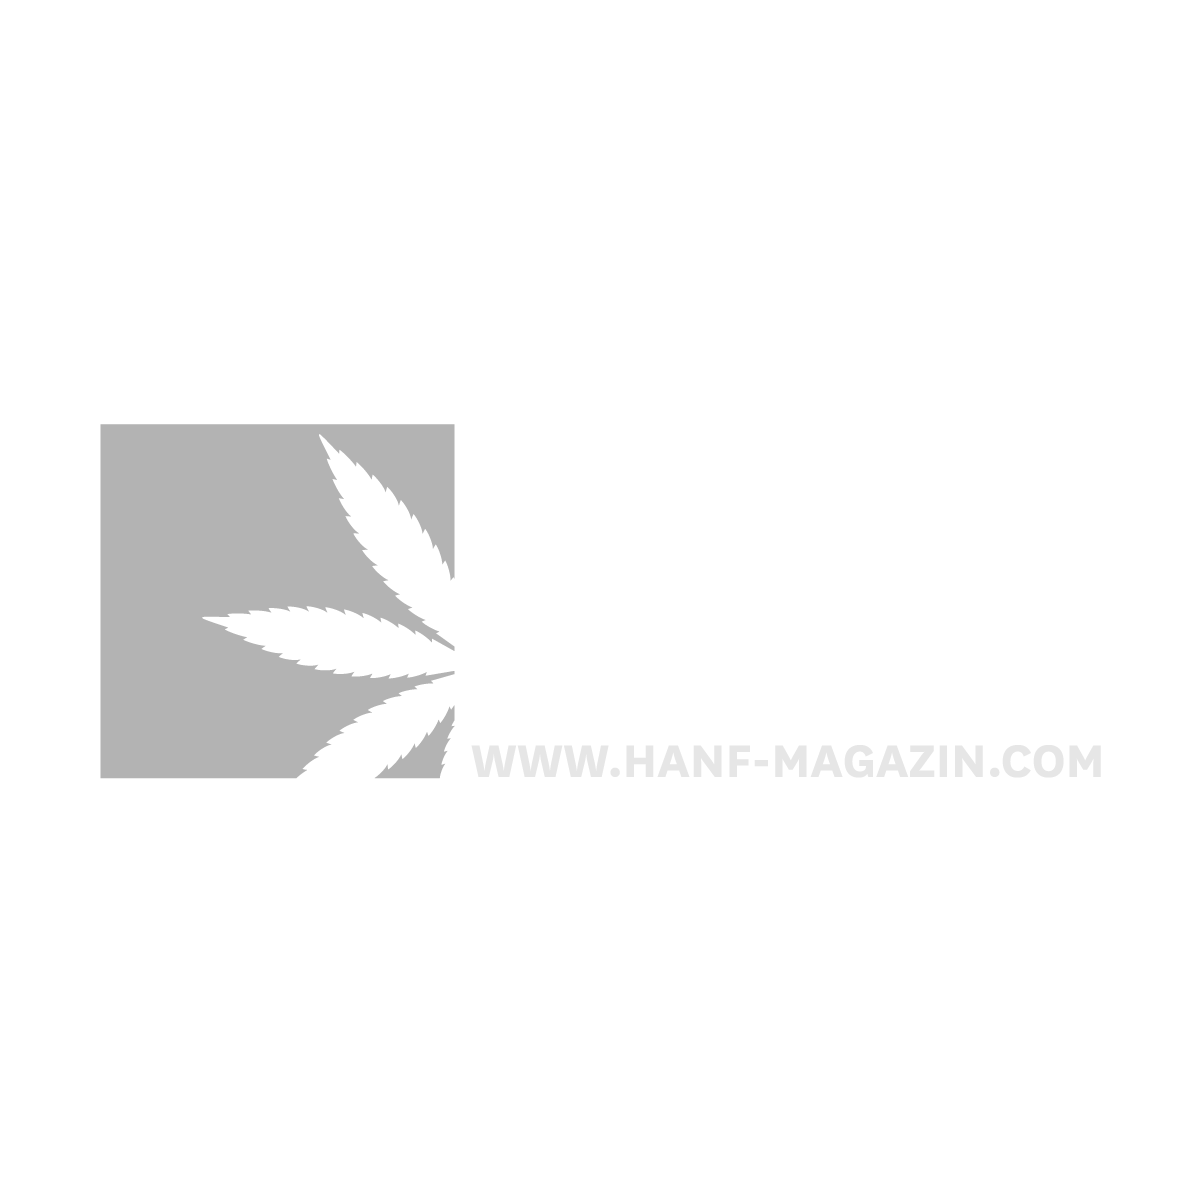 Hanf-Magzin